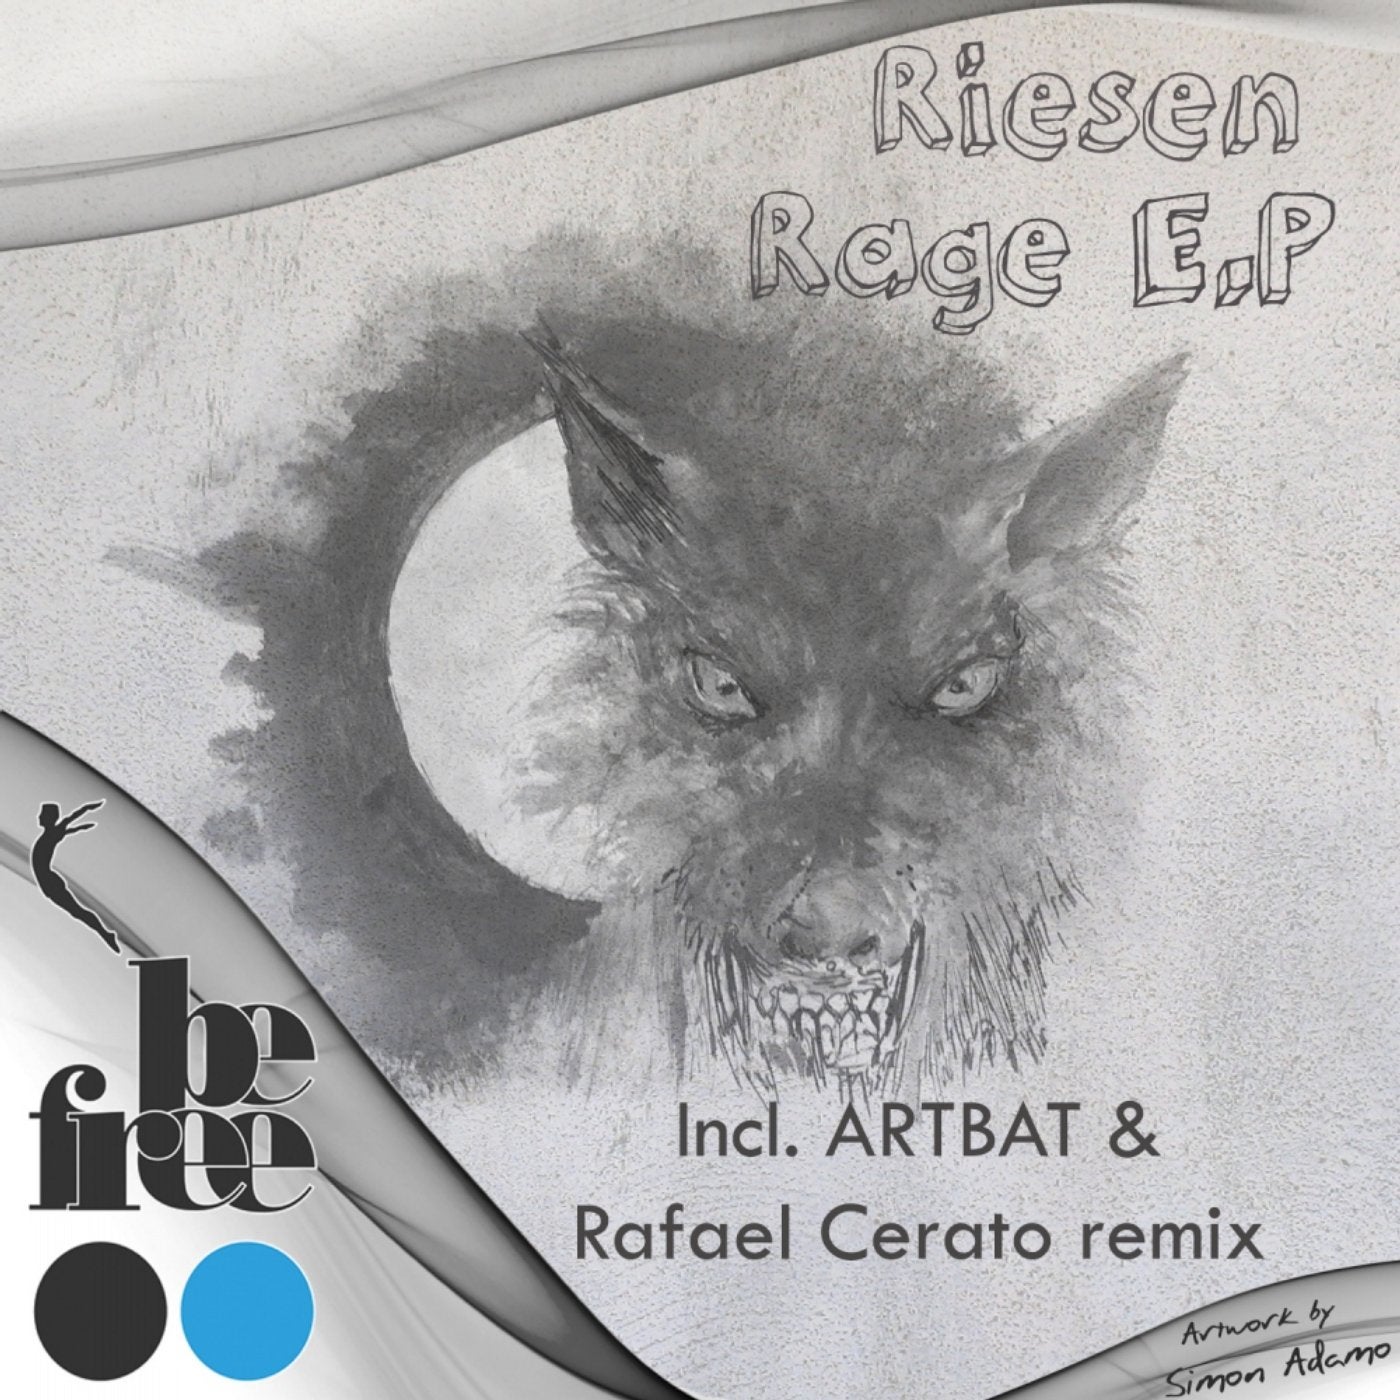 Return artbat remix. ARTBAT - Forever. Rafael Cerato, ARTBAT - uplift. ARTBAT Original Mix mp3. ARTBAT age of Love.